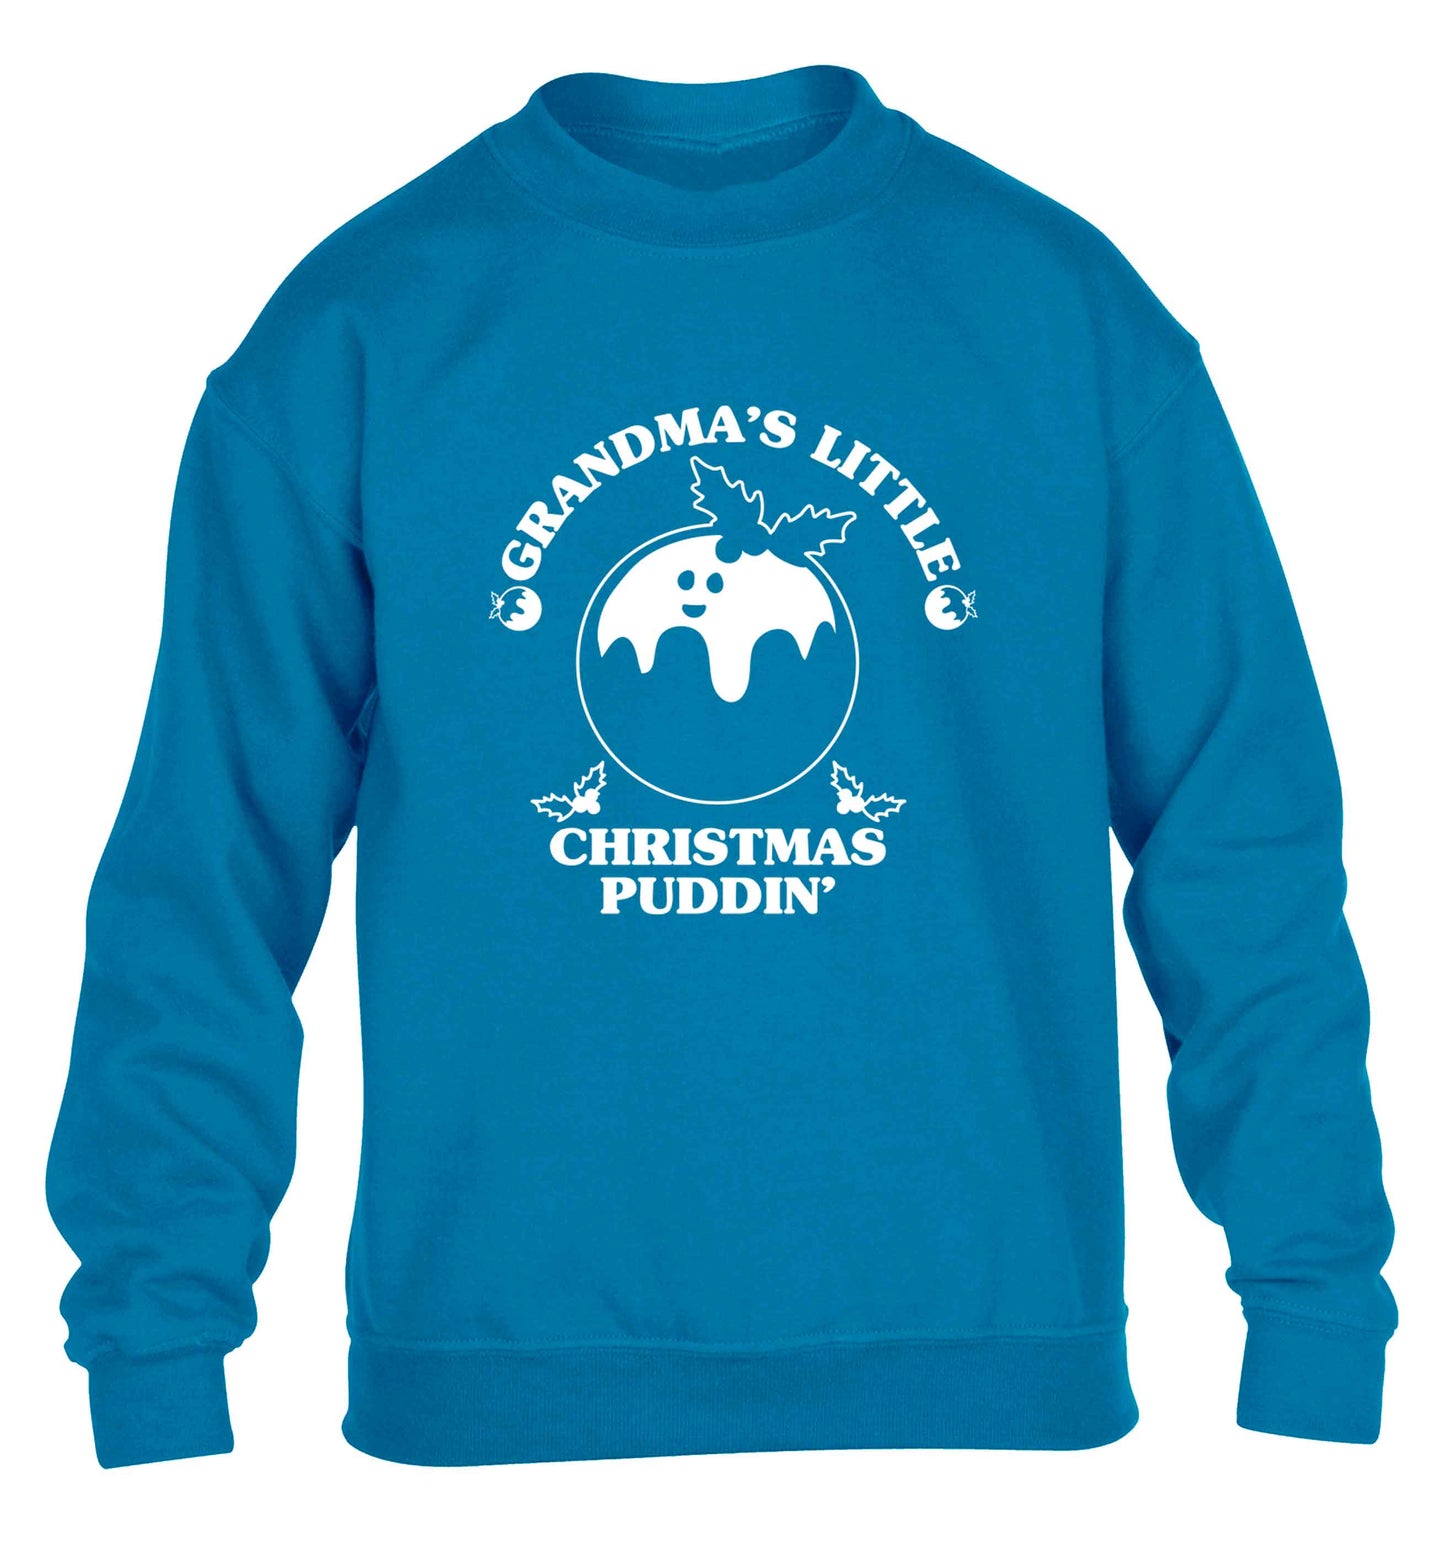 Grandma's little Christmas puddin' children's blue sweater 12-13 Years